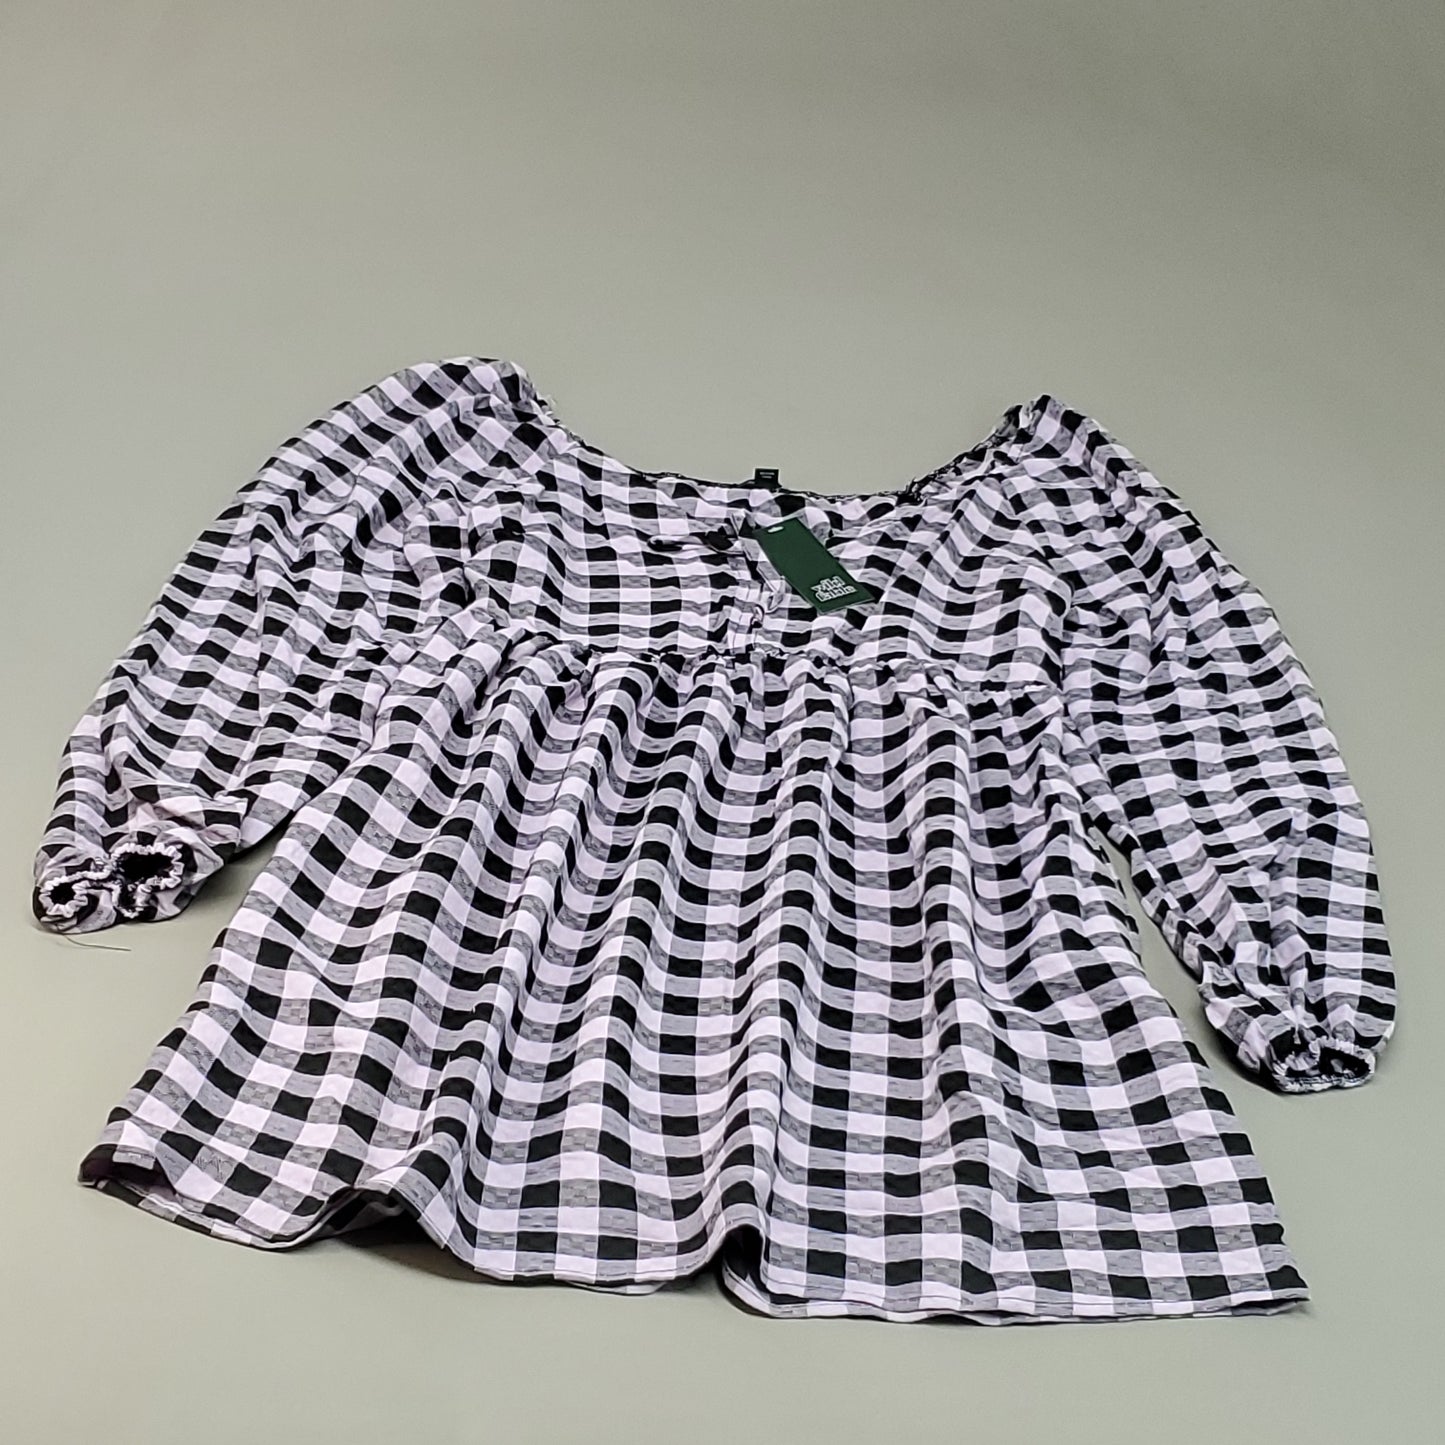 WILD FABLE Women's Amethyst Checkered Dress Sz M Black/Pink 331 08 6996 (New)